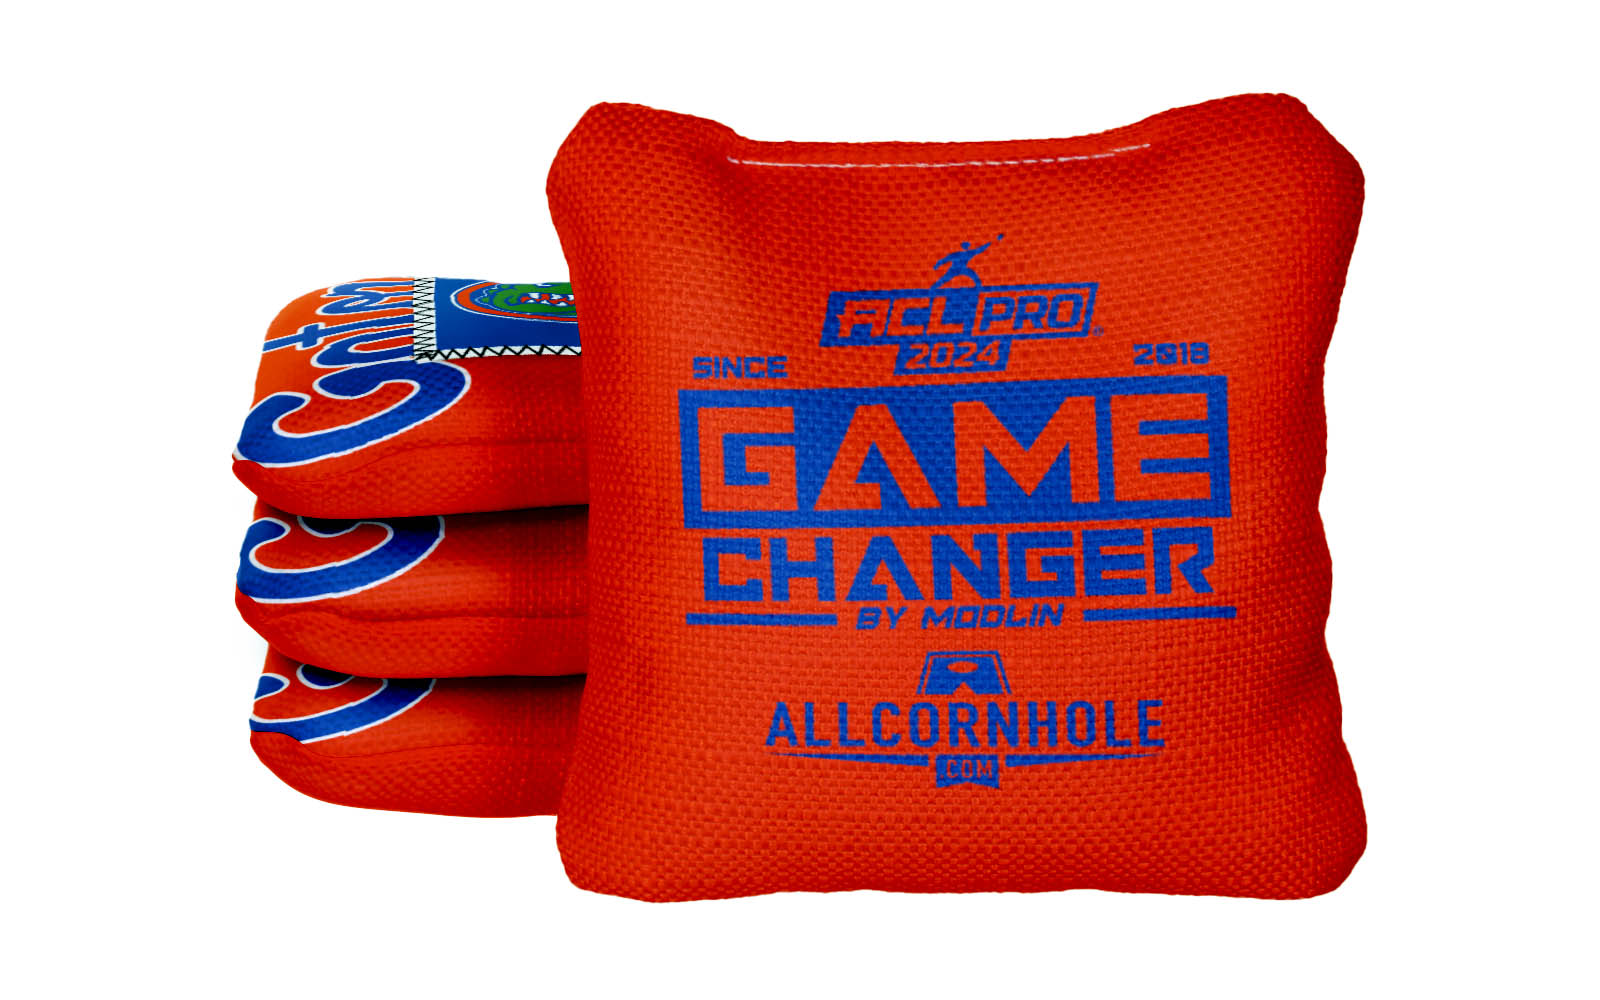 Officially Licensed Collegiate Cornhole Bags - AllCornhole Game Changers - Set of 4 - University of Florida